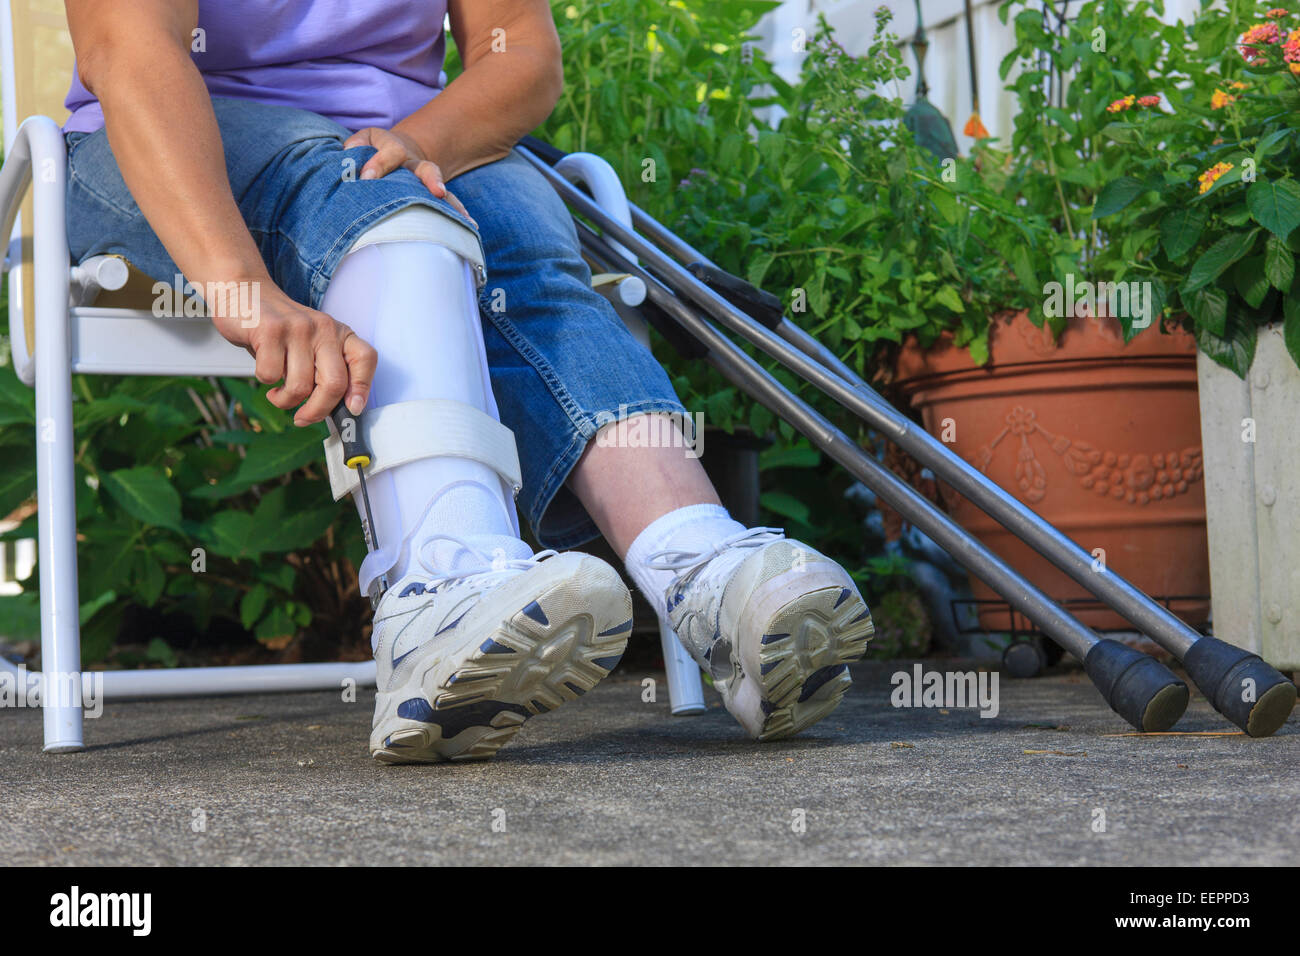 https://c8.alamy.com/comp/EEPPD3/woman-with-spina-bifida-adjusting-leg-brace-so-she-can-walk-EEPPD3.jpg